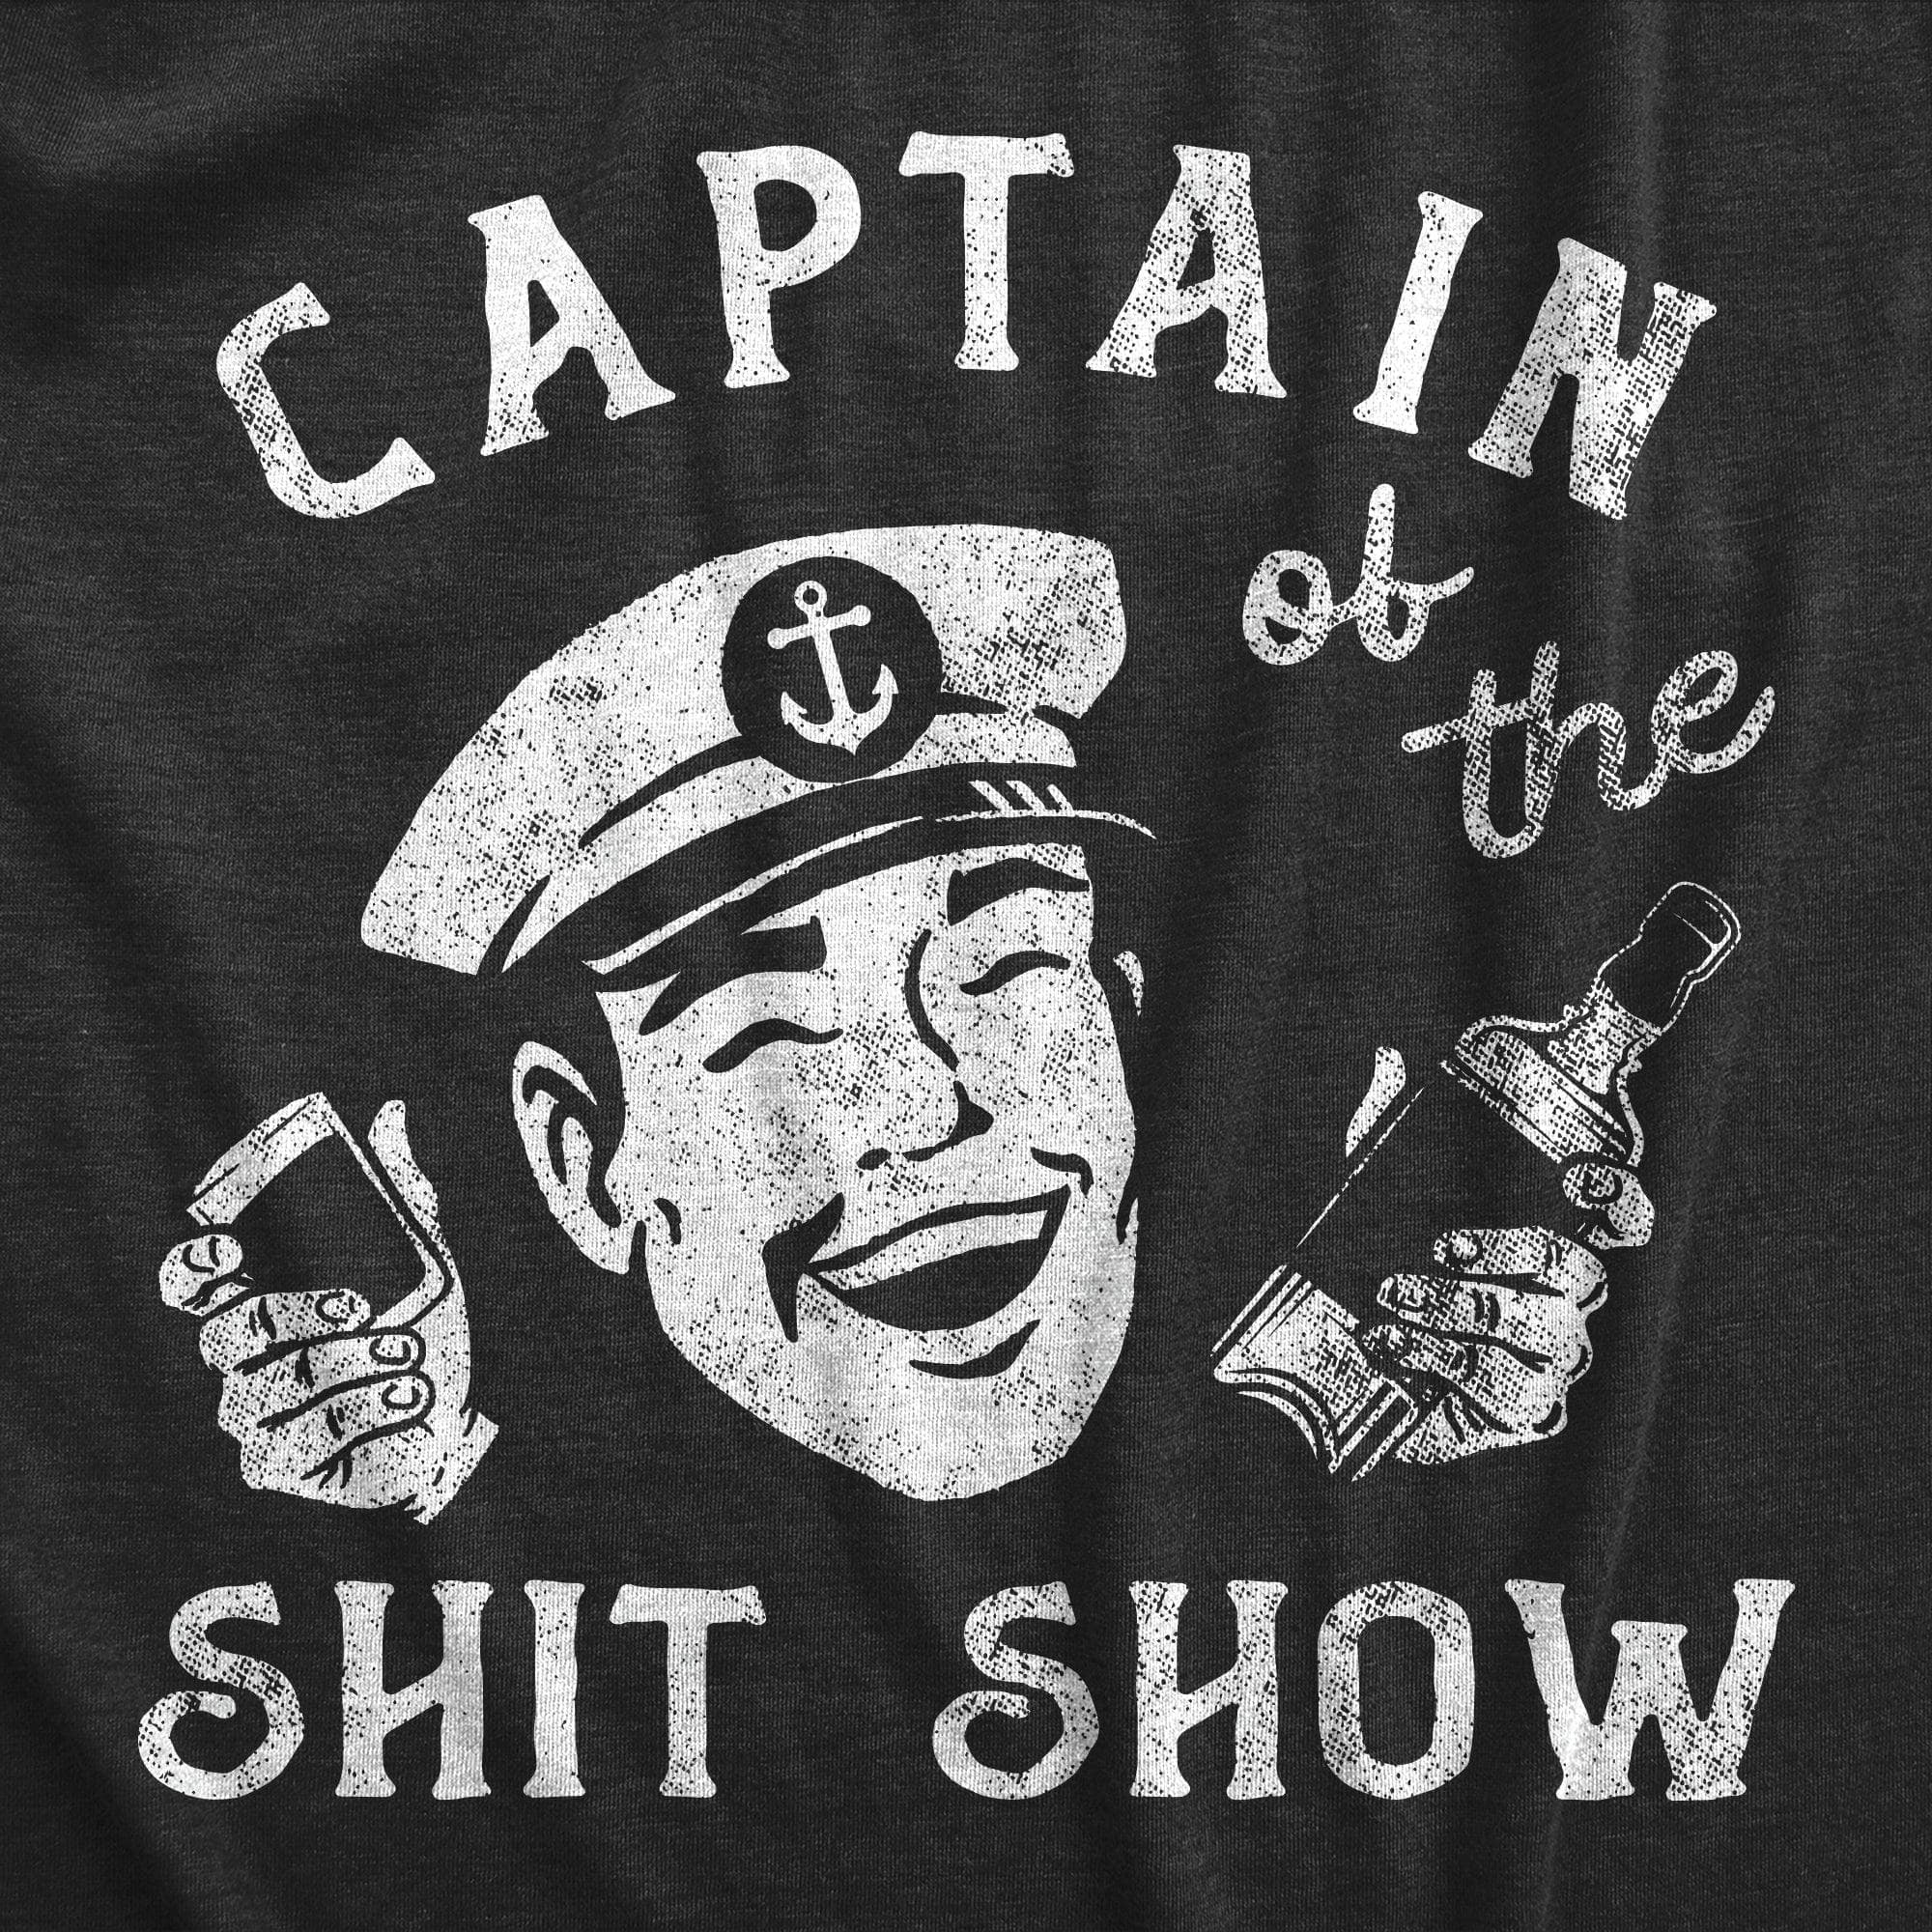 Captain Of The Shit Show Men's Tshirt  -  Crazy Dog T-Shirts